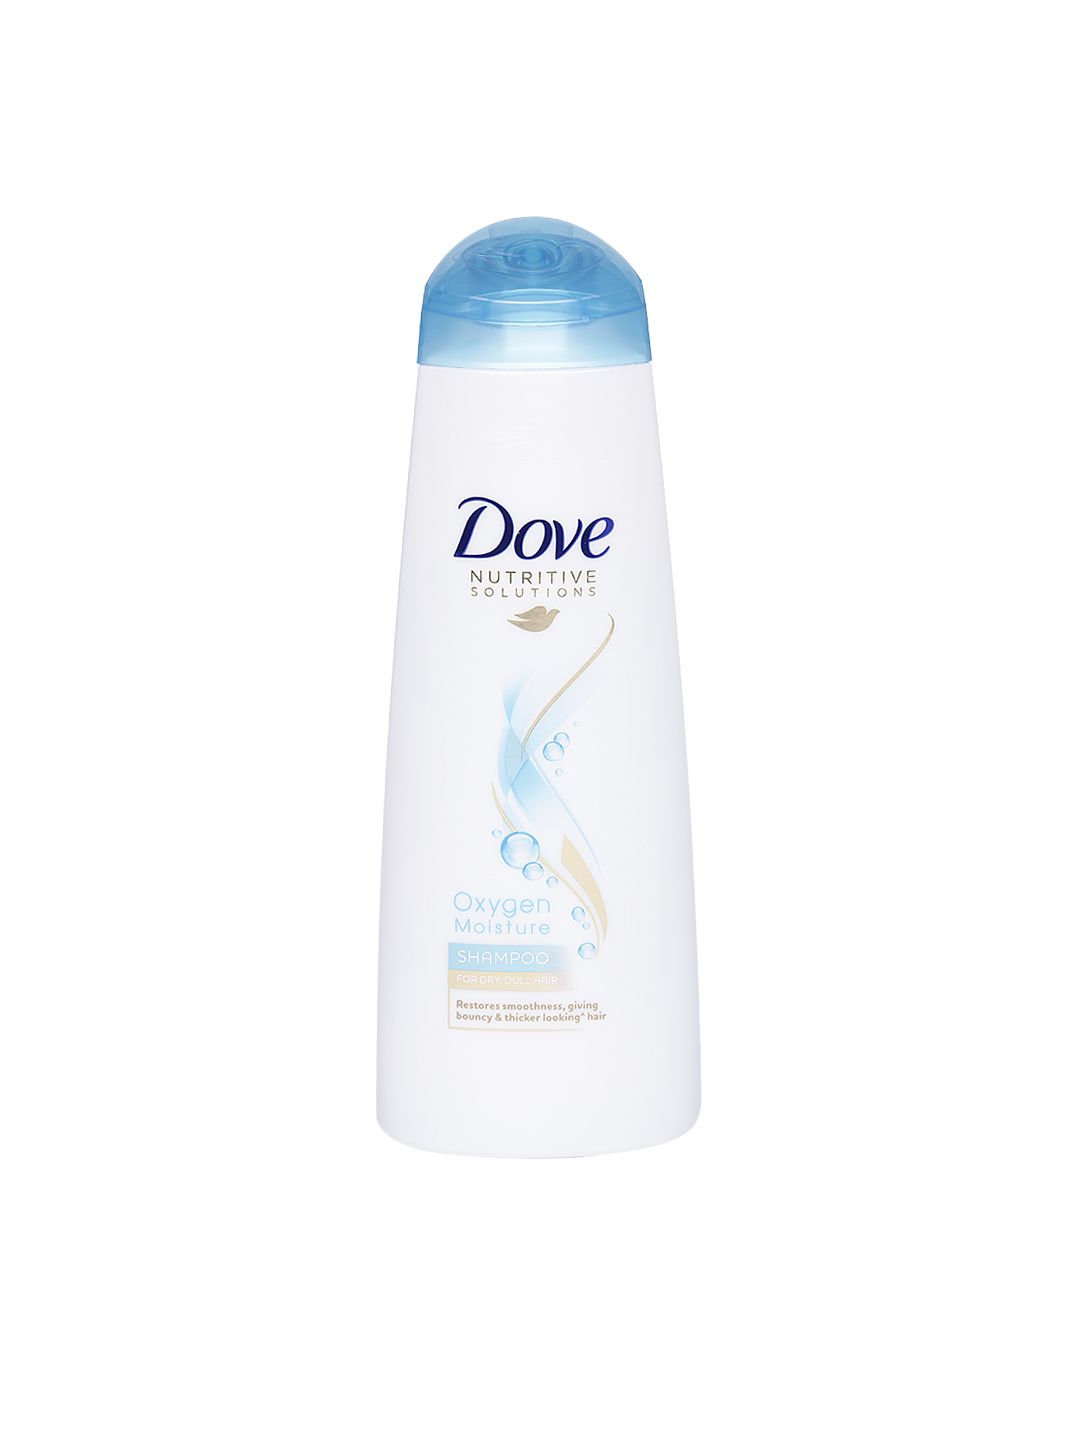 Dove Nutritive Solutions Oxygen Moisture Shampoo 340 ml Price in India